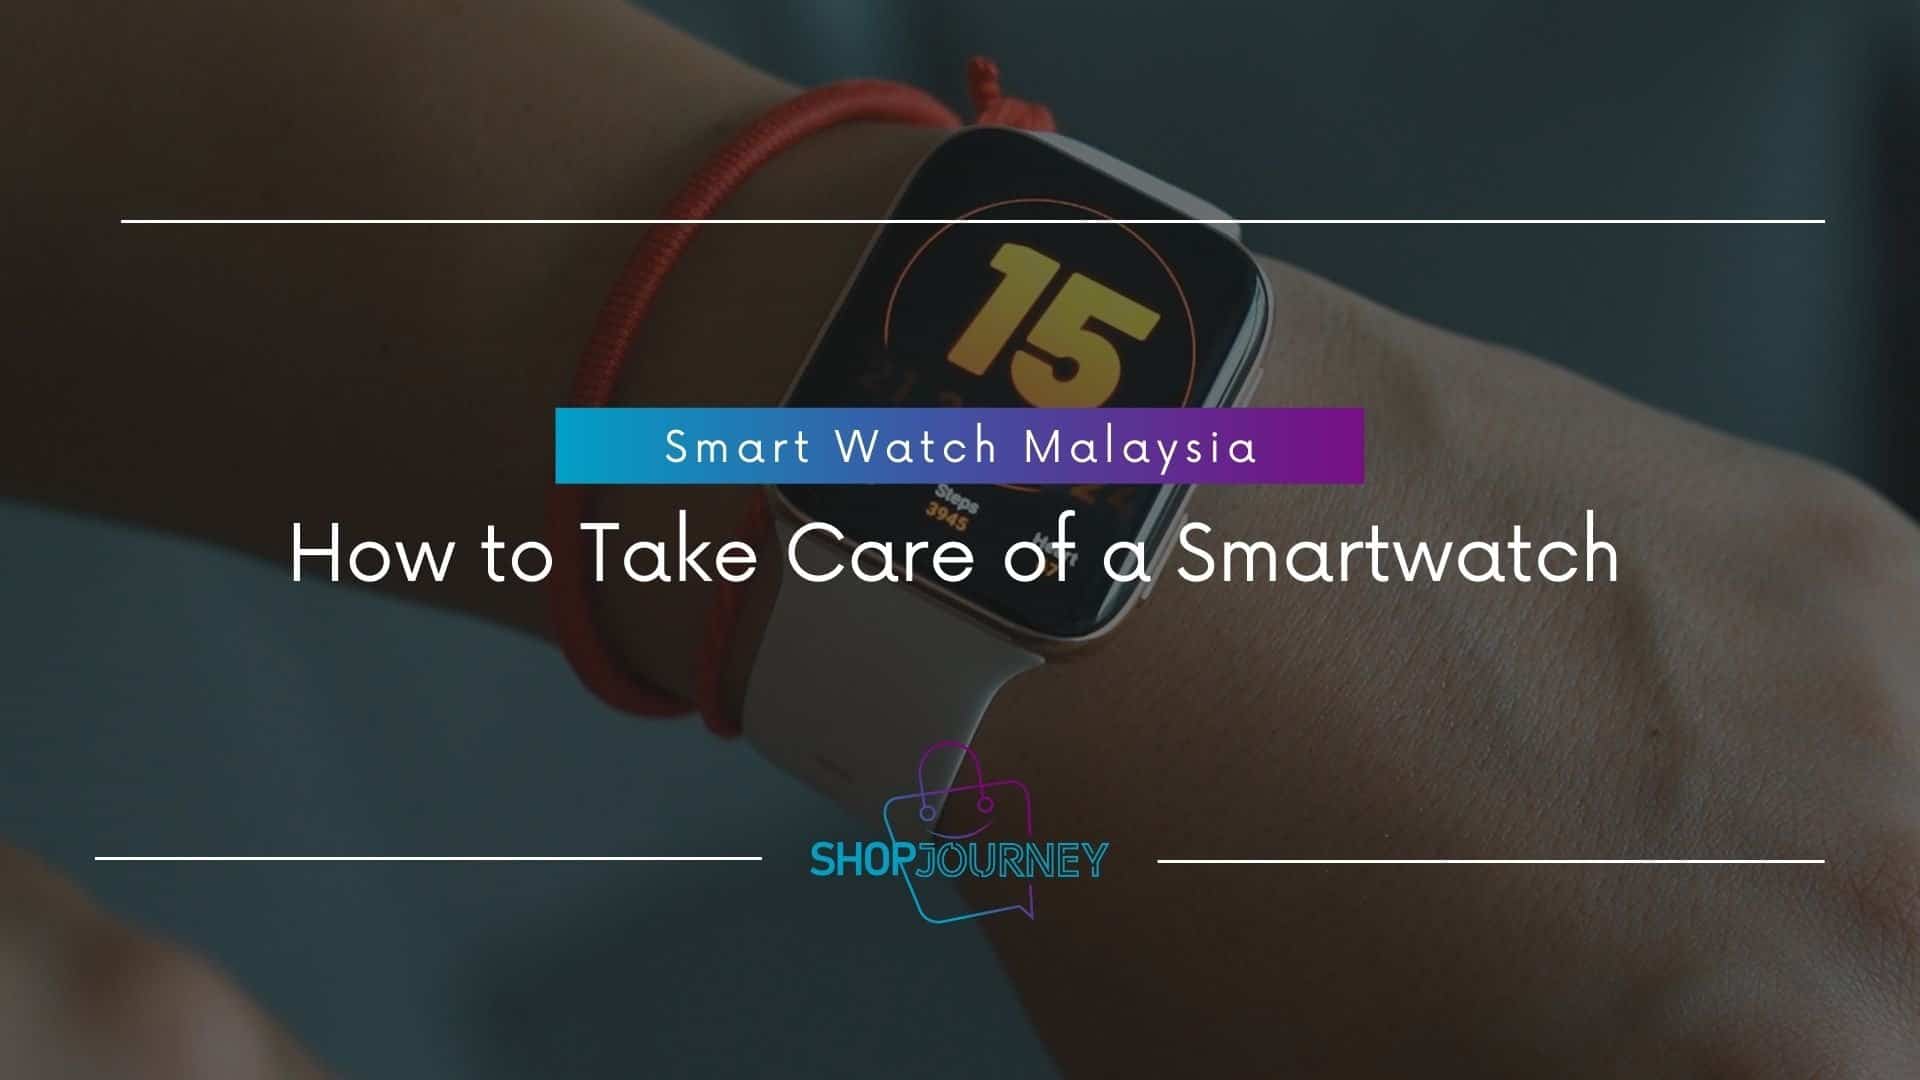 Smart watch malaysia - taking care of a smartwatch.